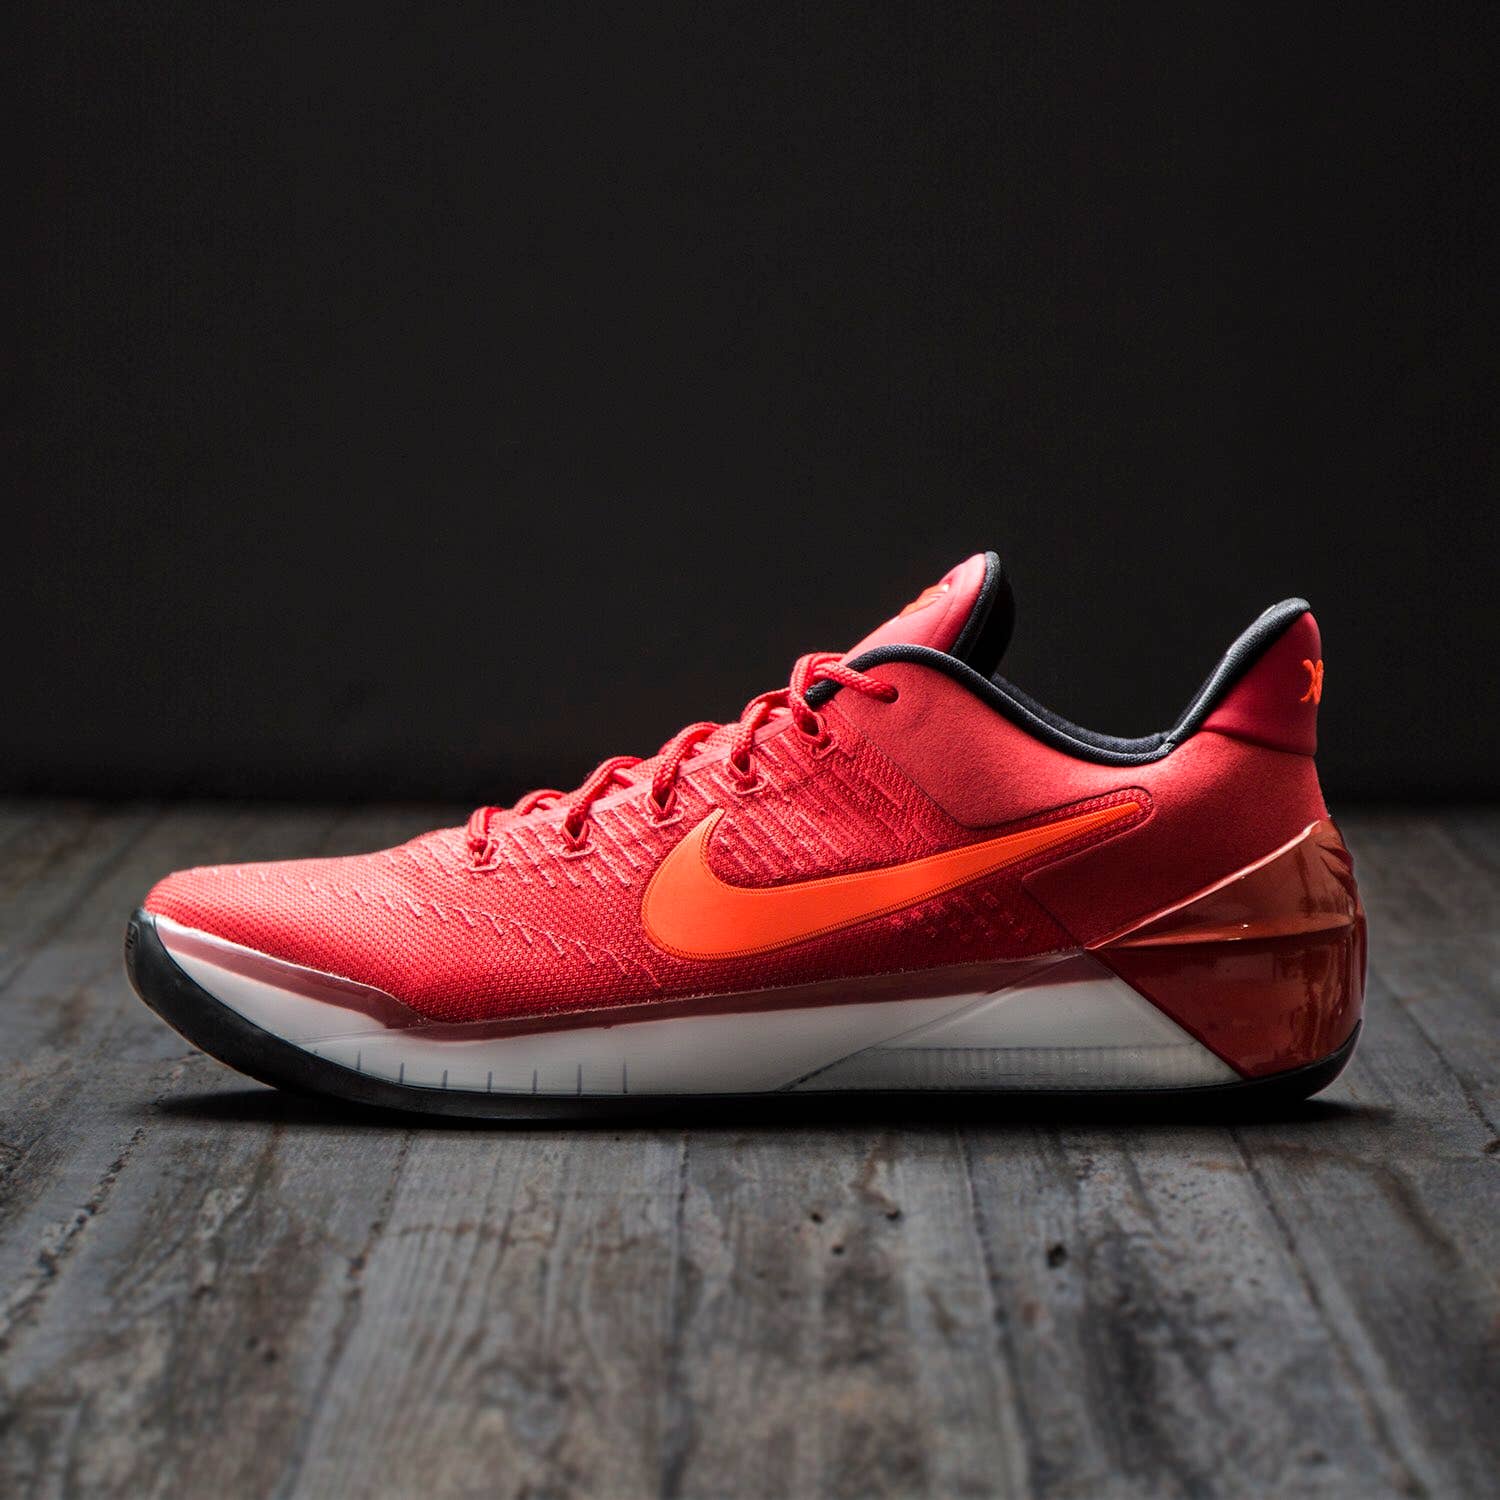 Nike Kobe AD University Red Release Date 852425 608